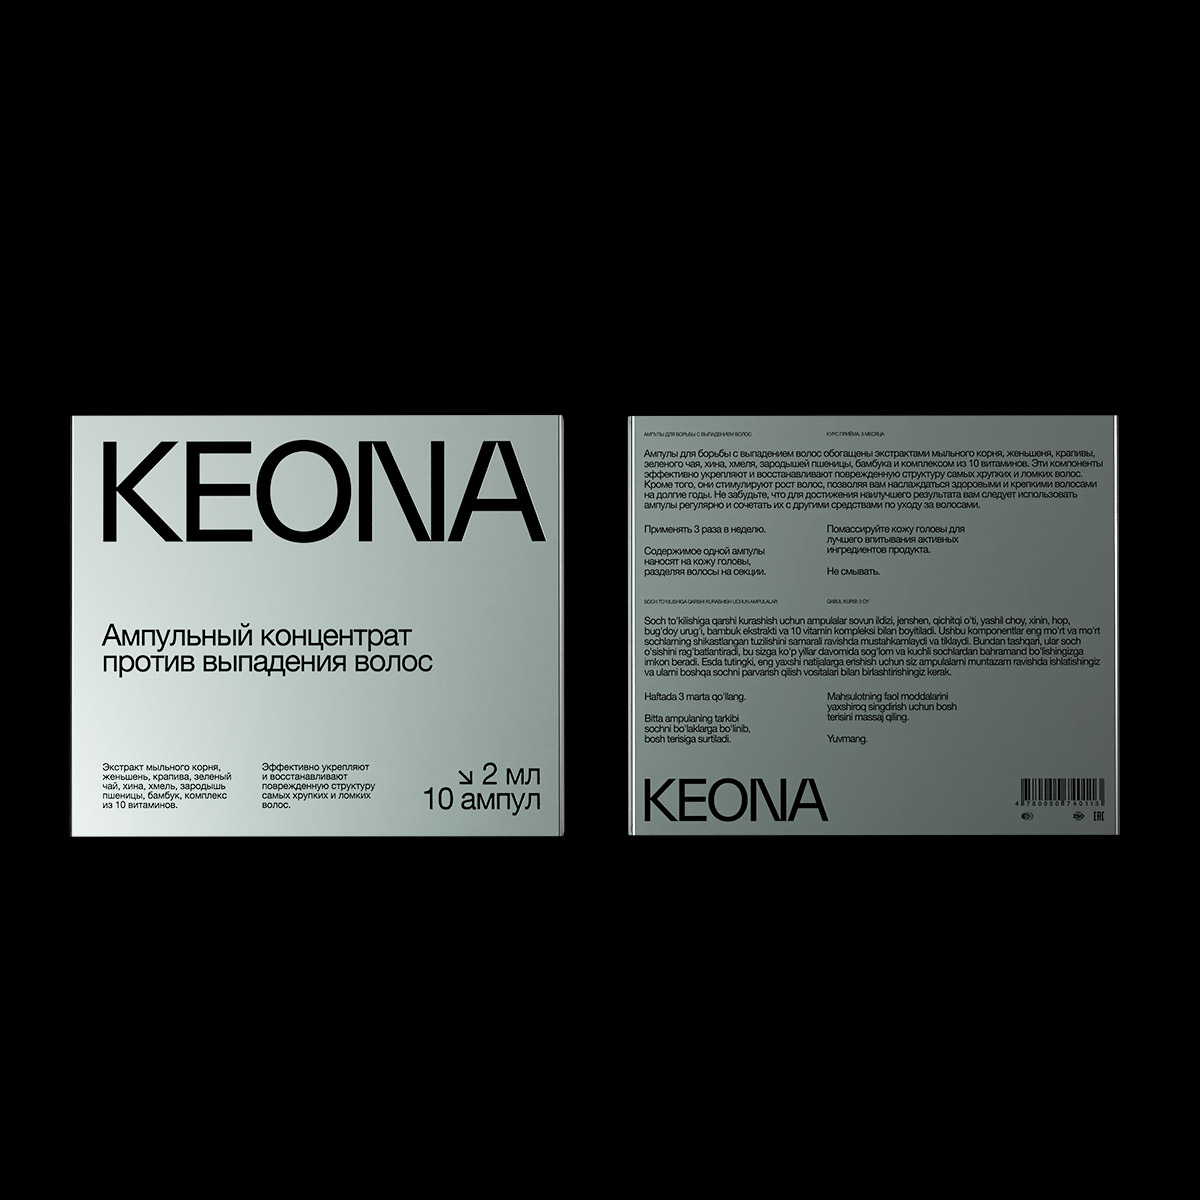 Keona Branding